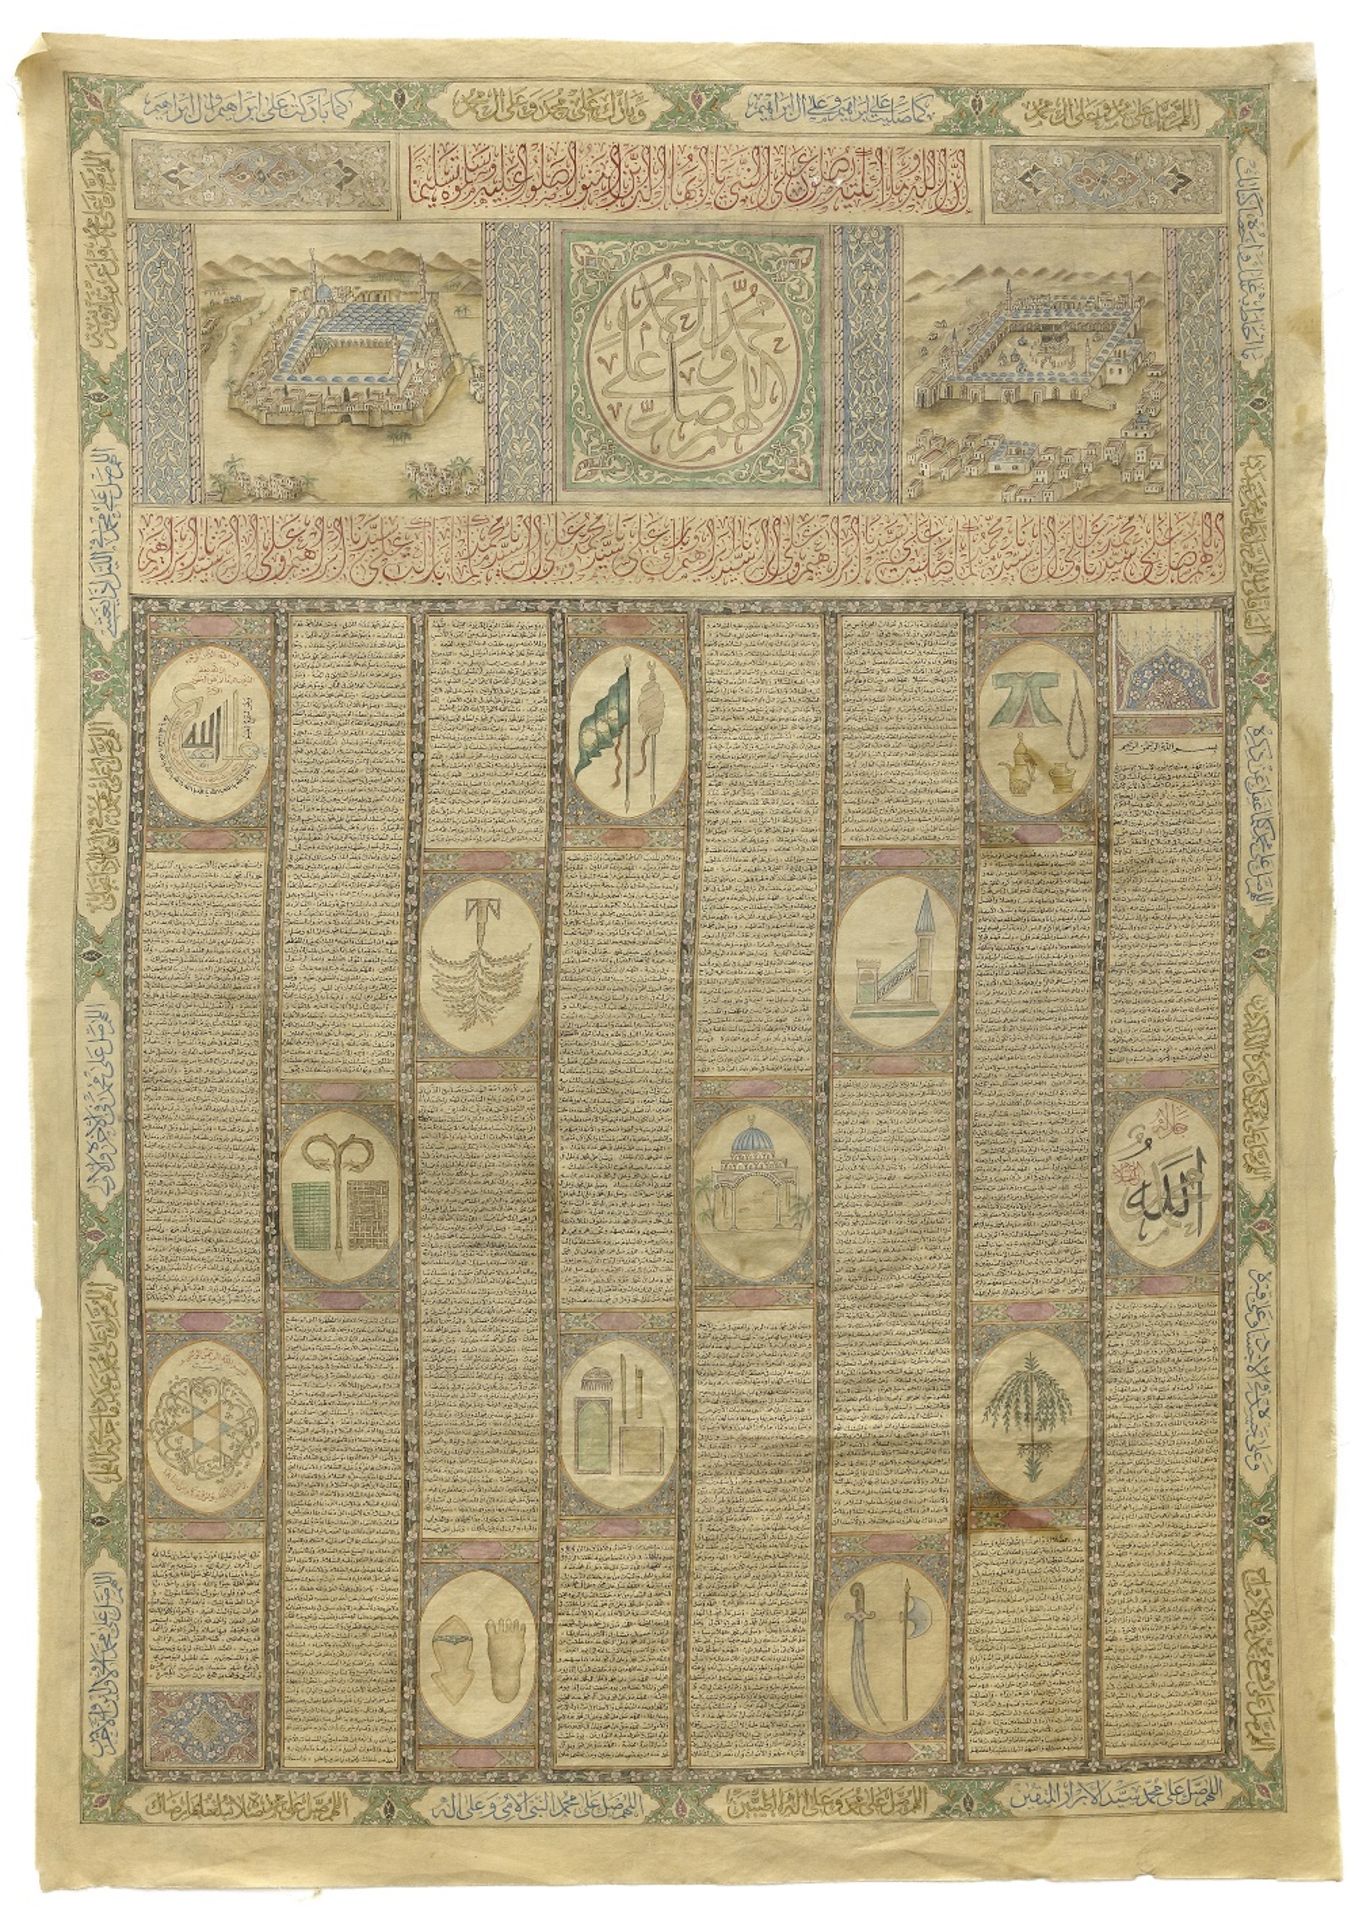 AN OTTOMAN TALISMANIC CHART WITH DALAIL AL KHAYRAT, BY ABDUL-JALIL AL-BUSIRI DATED 1218 AH/1803 AD